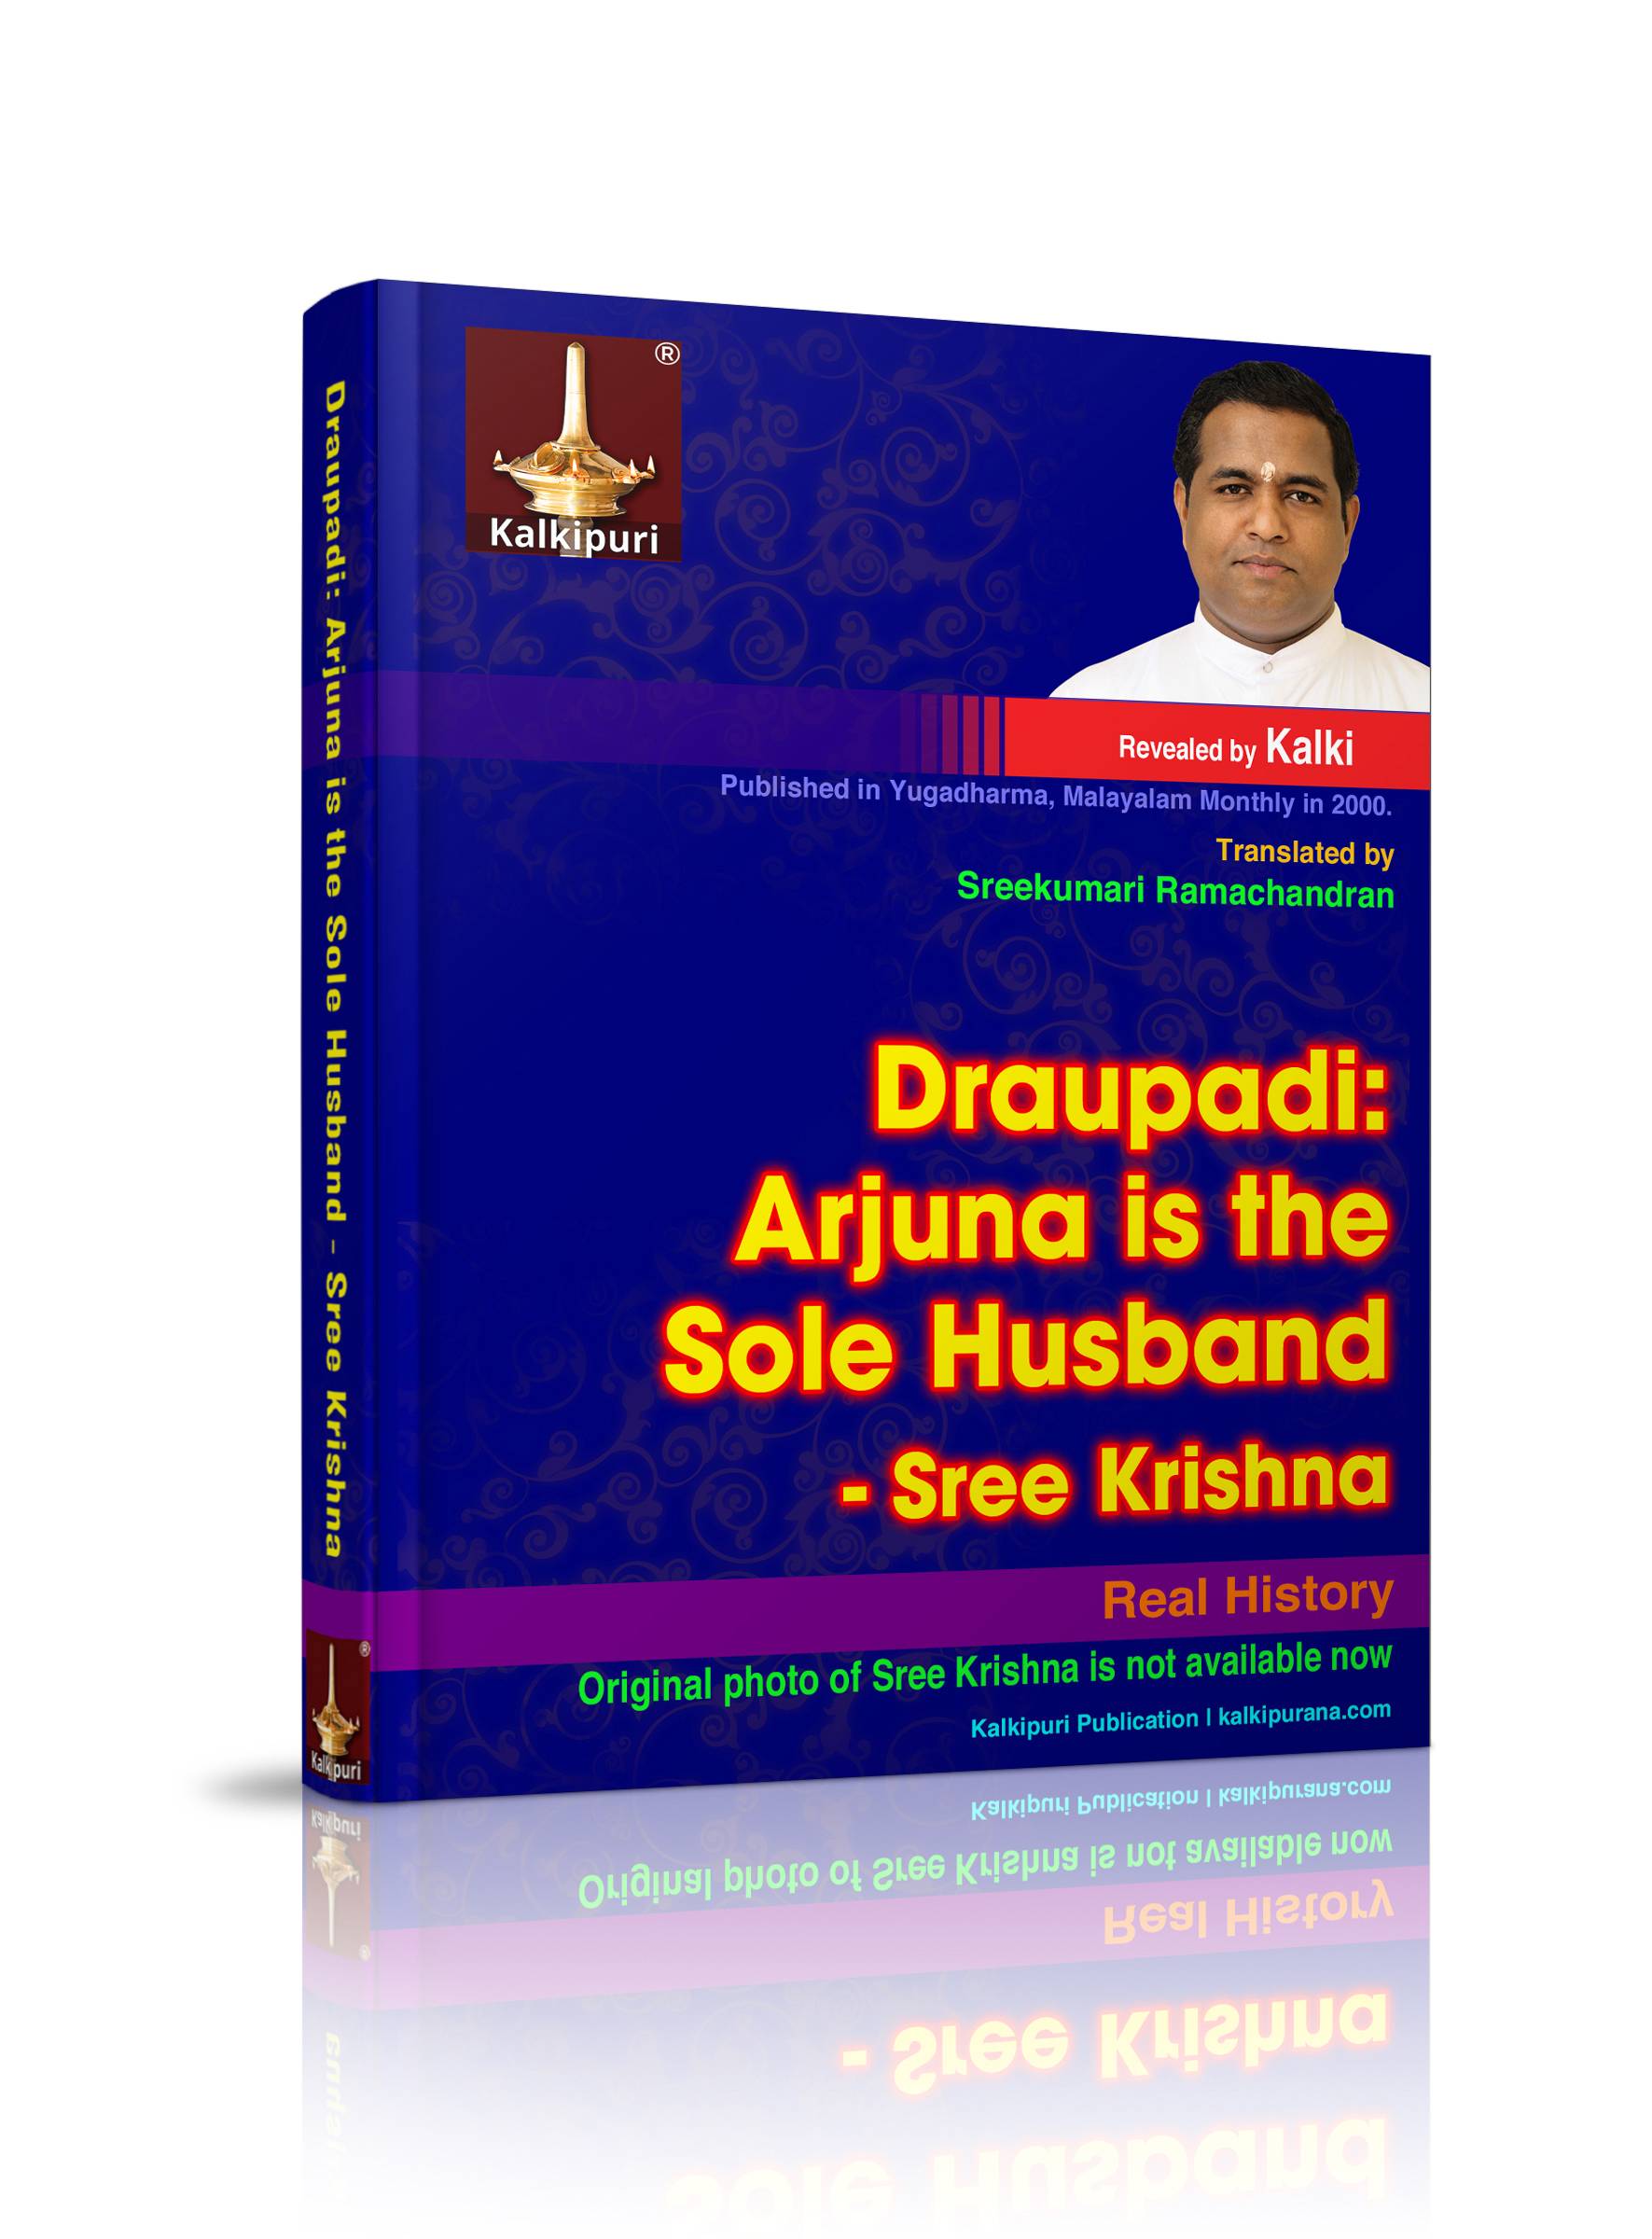 Sree Krishna says Arjuna is the sole husband of Draupadi. Kalki revaled the real history. Book Cover.